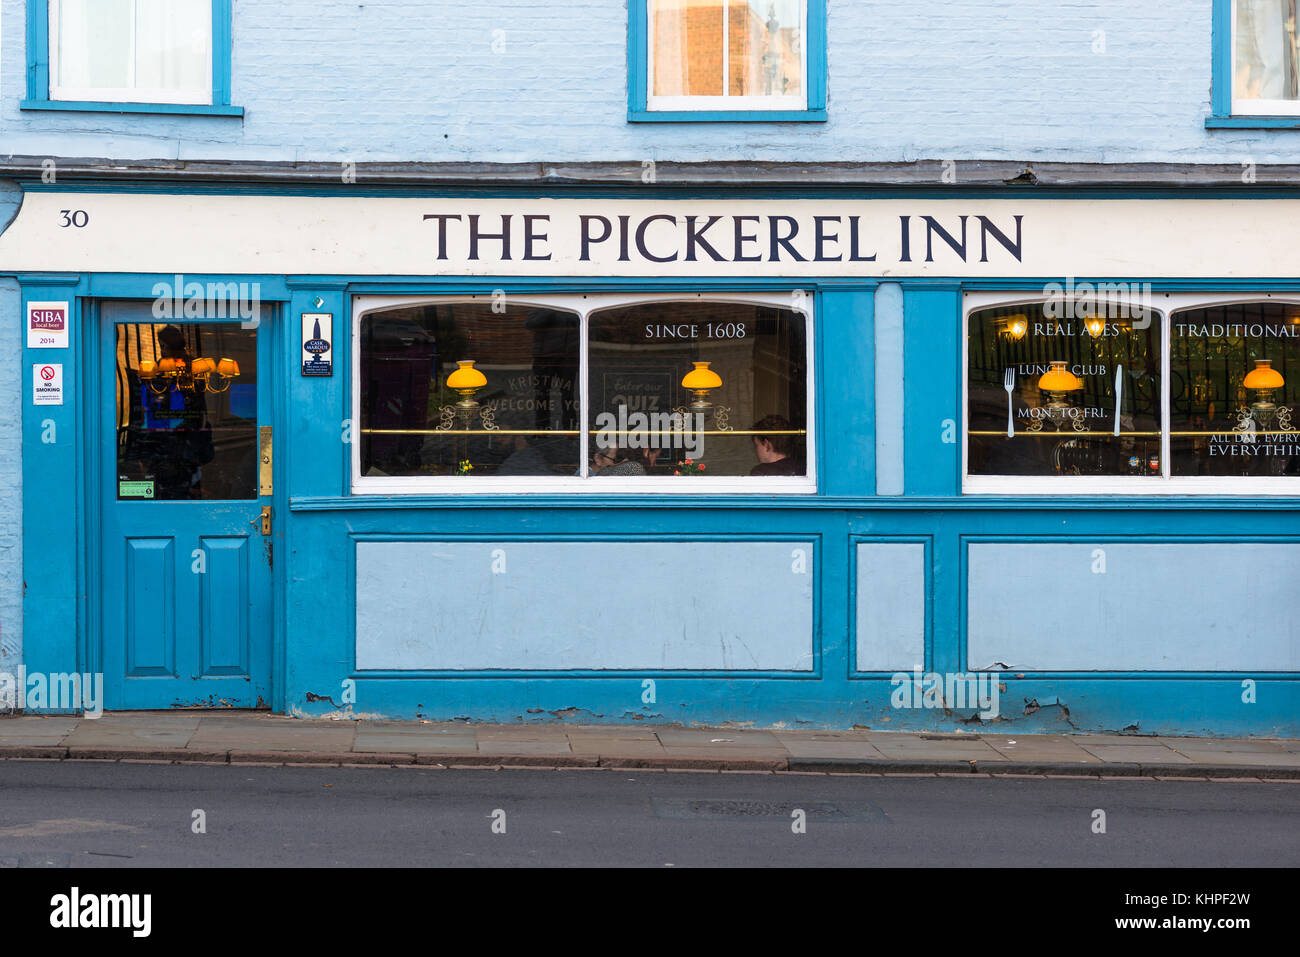 Ancient pub The Pickerel Inn, founded in 1608 on Bridge St Cambridge city, England, UK. Stock Photo